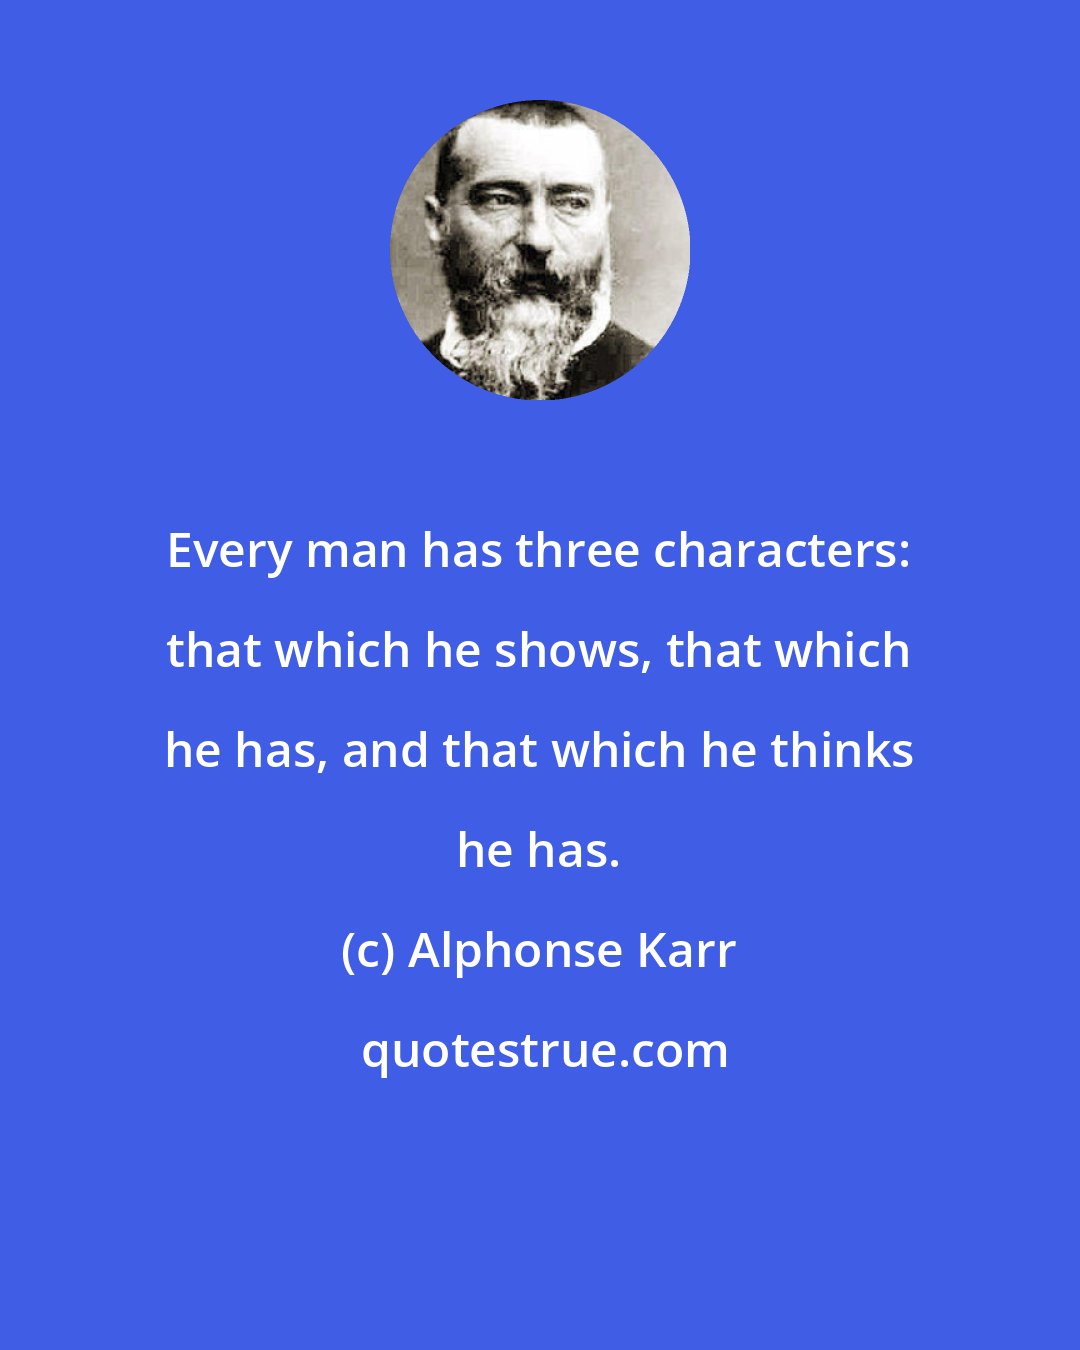 Alphonse Karr: Every man has three characters: that which he shows, that which he has, and that which he thinks he has.